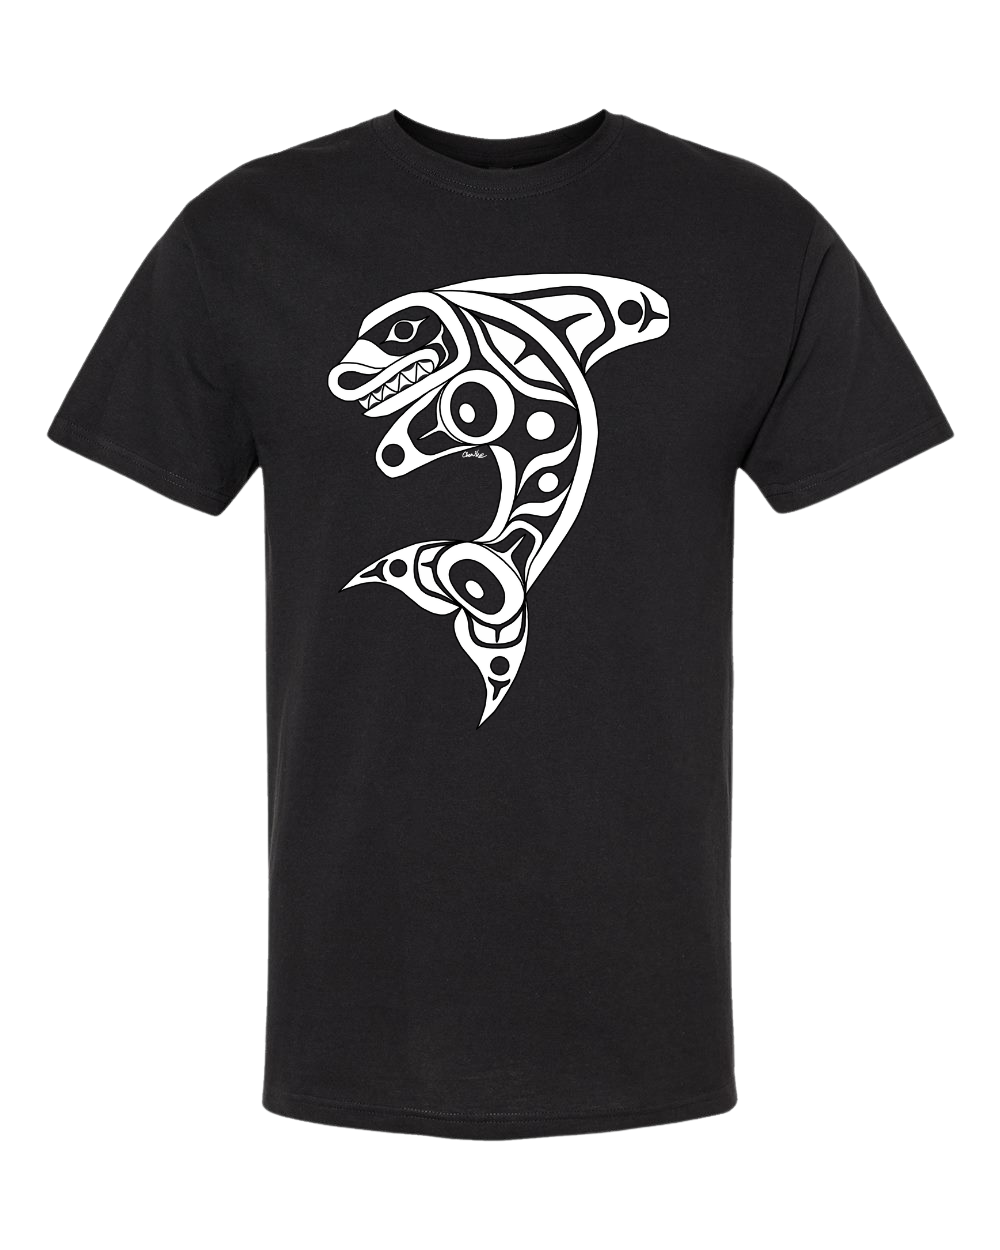 Chanelle Firth-Ward T-Shirt Black